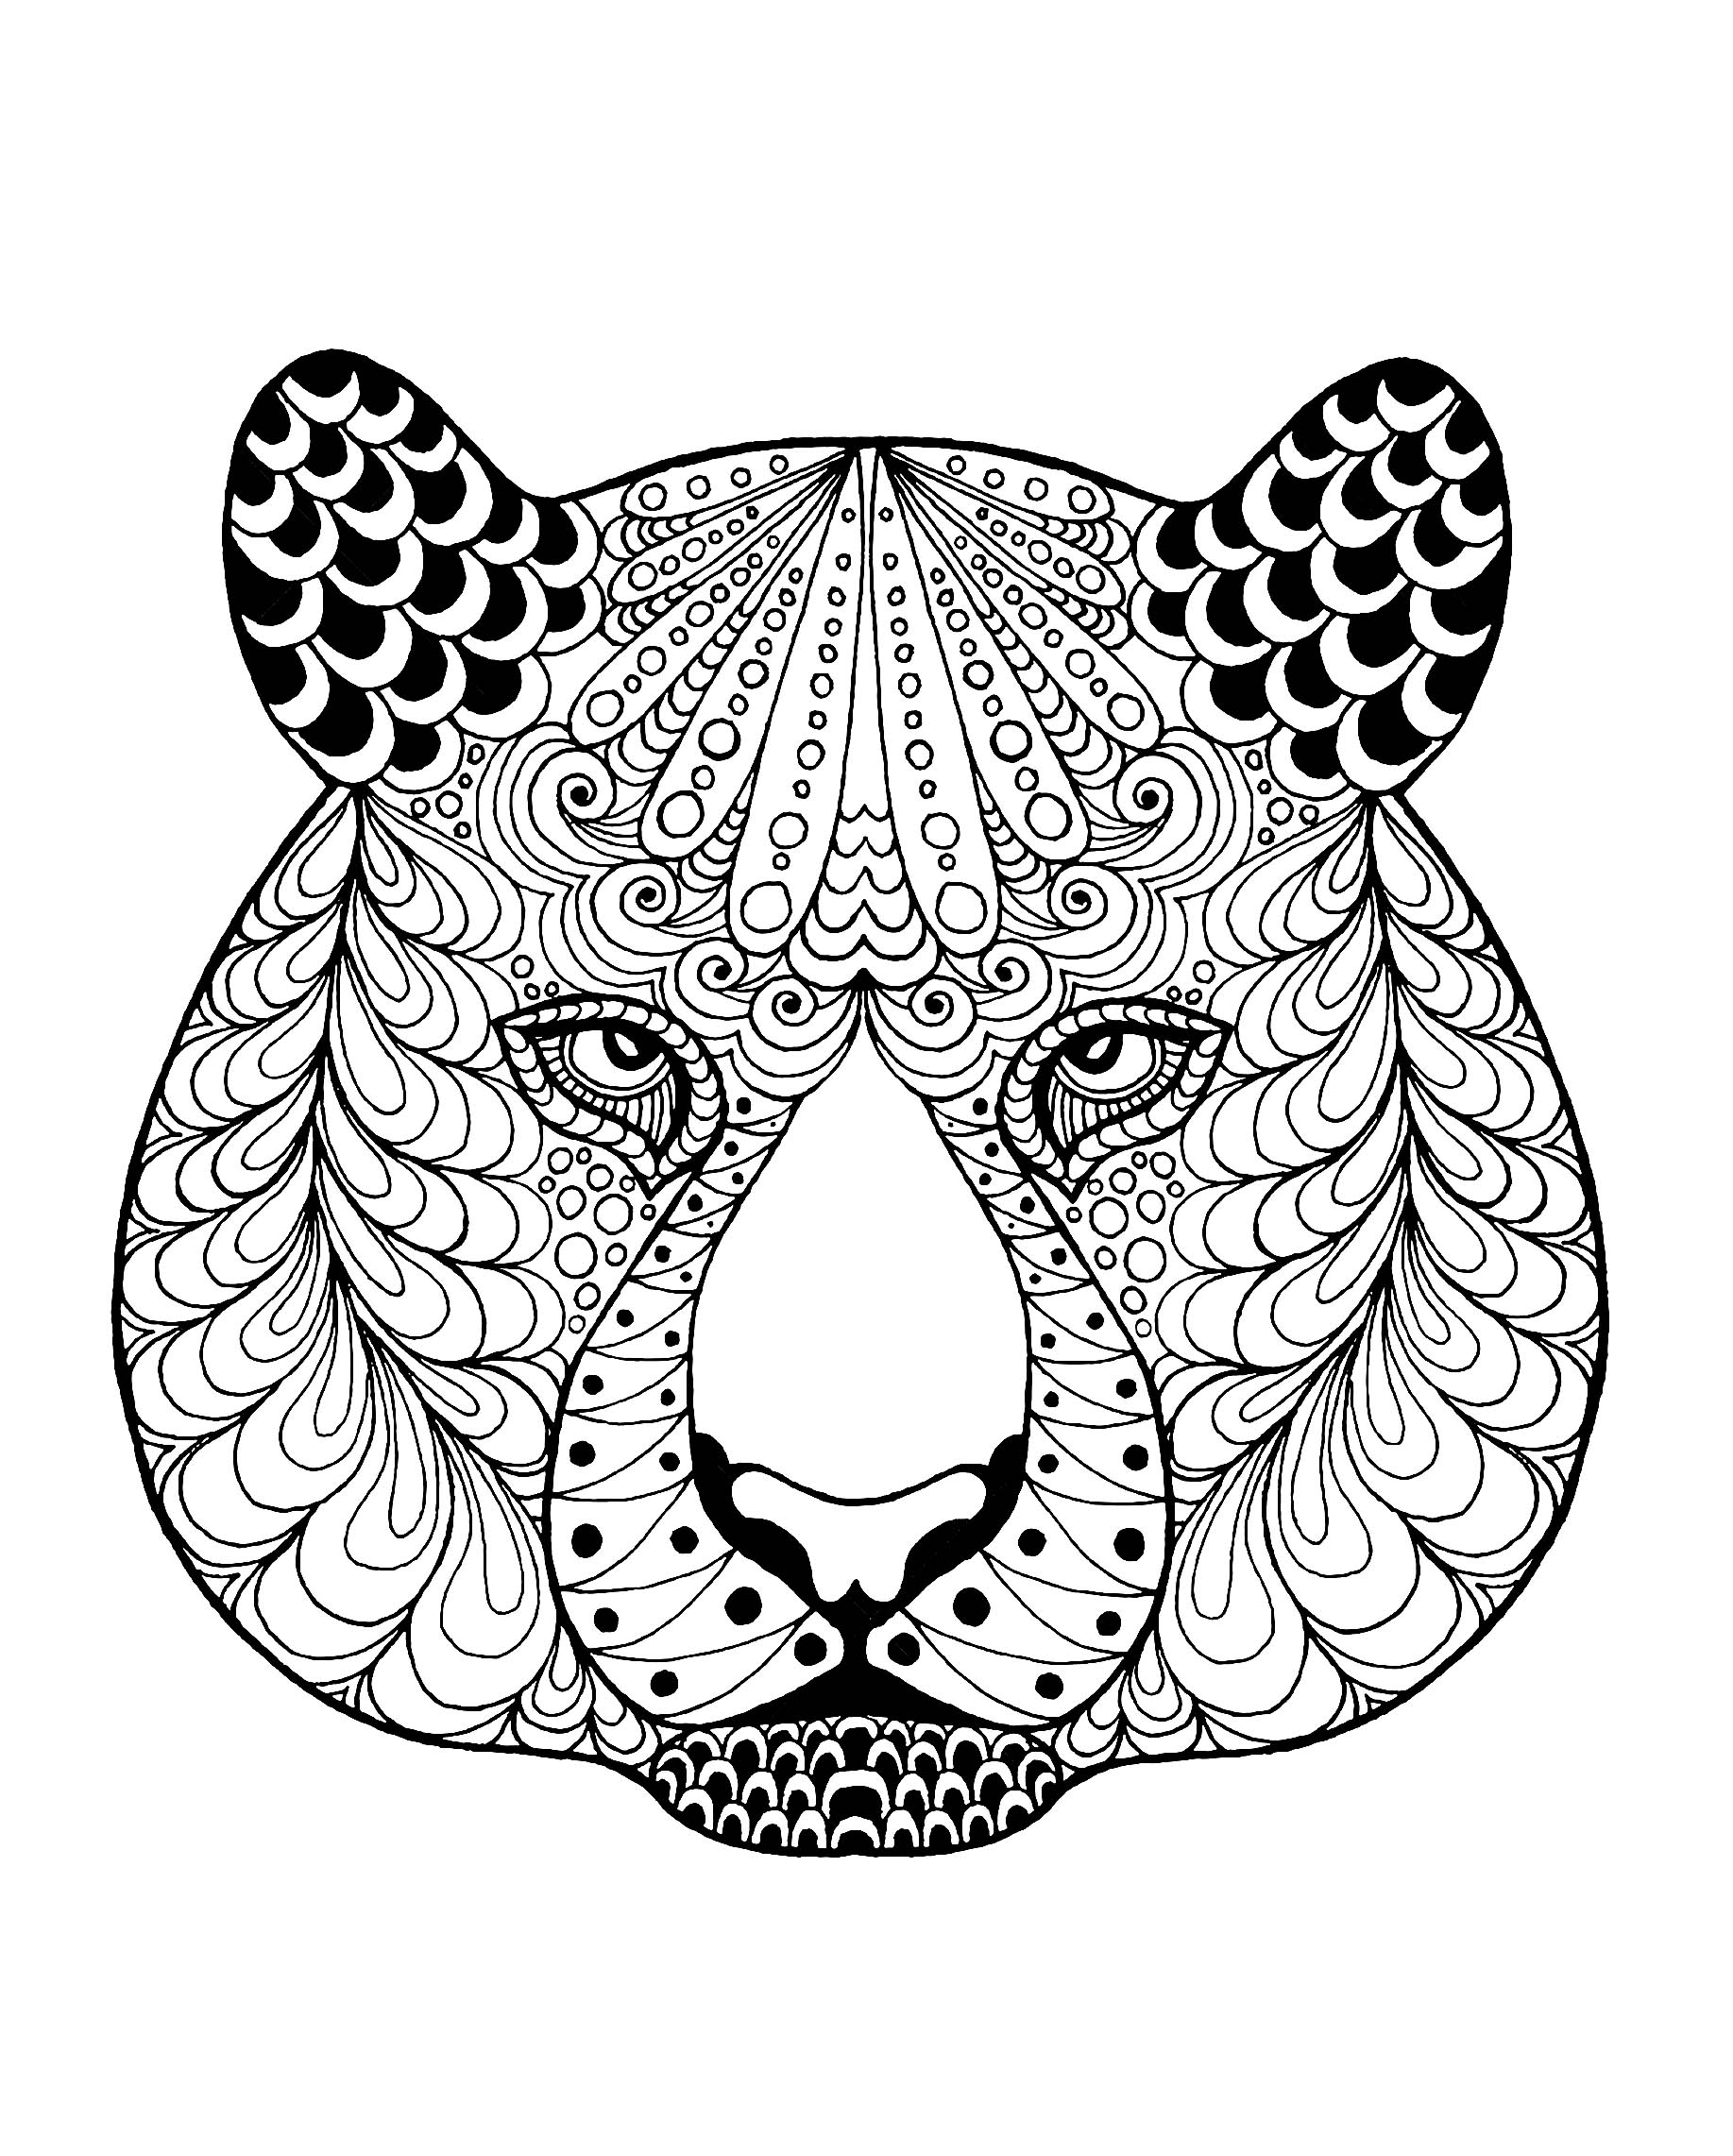 Malbuch Fur Erwachsene  : Tigers - 2, Künstler : Safiullina   Quelle : 123rf